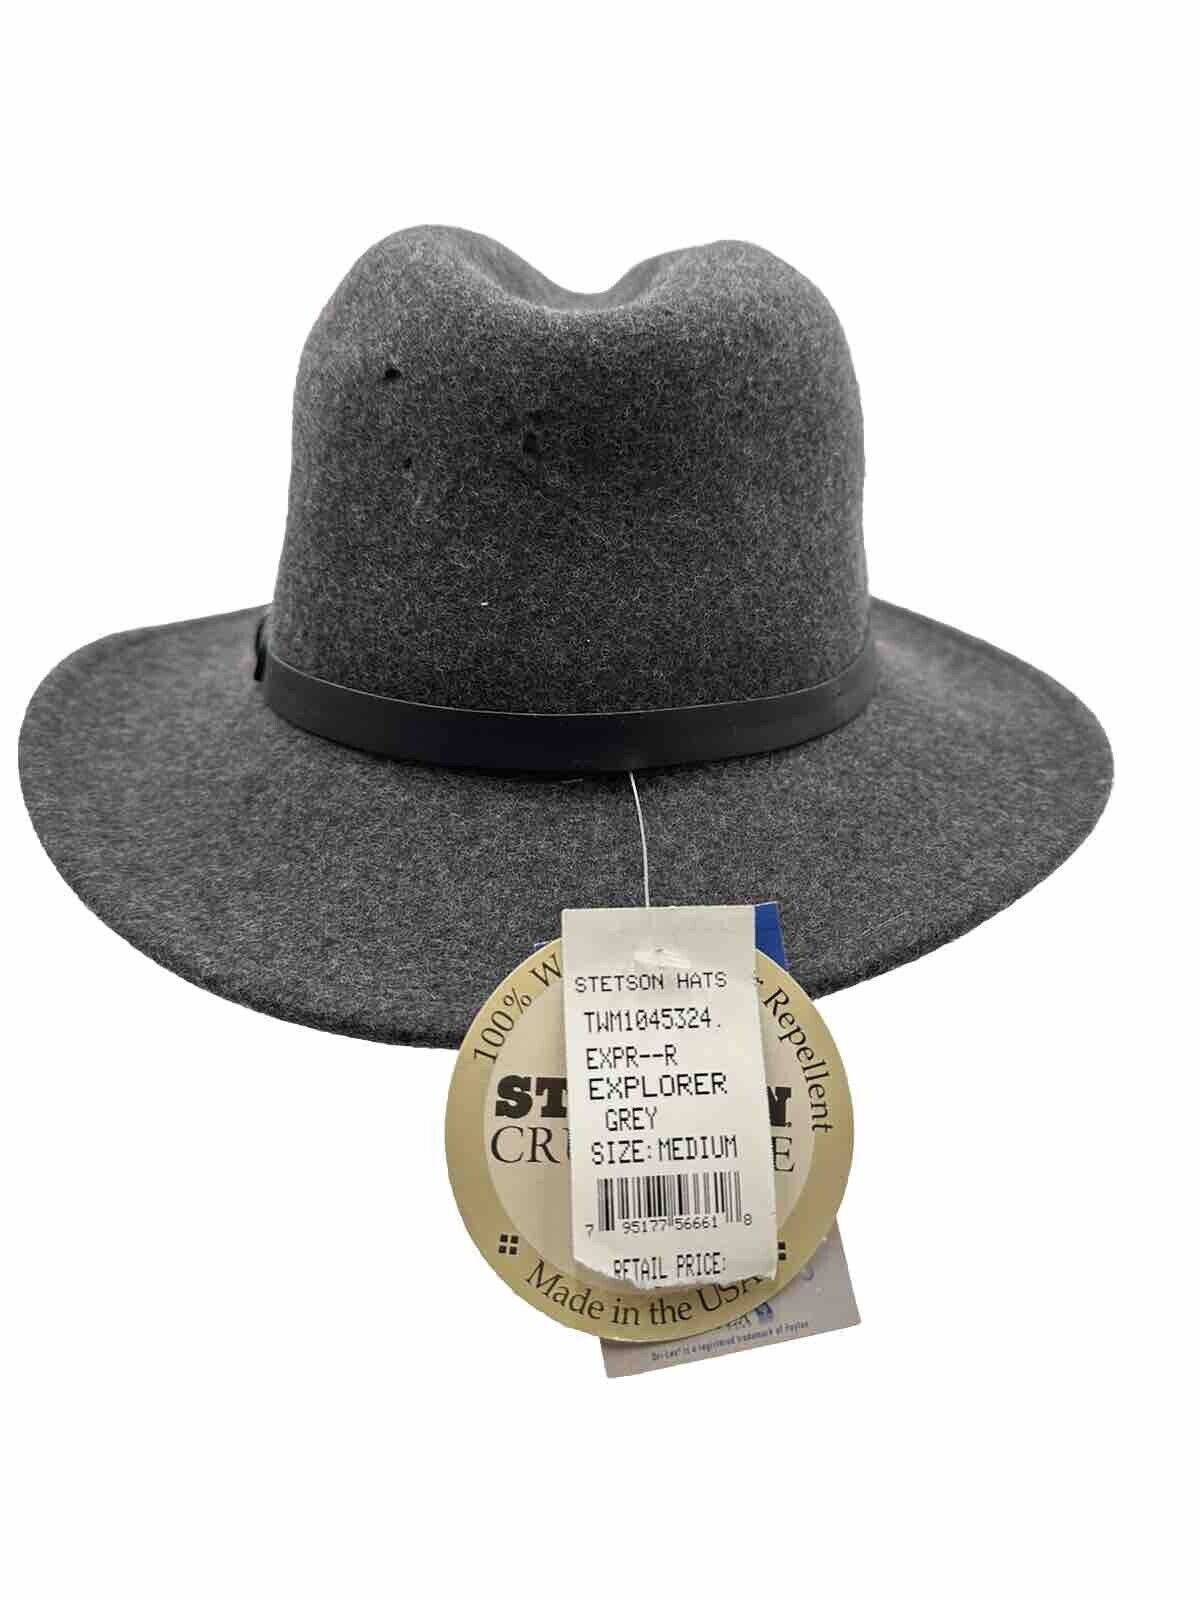 NEW Men’s Stetson Explorer Hat Crushable Grey MEDIUM  100% Wool